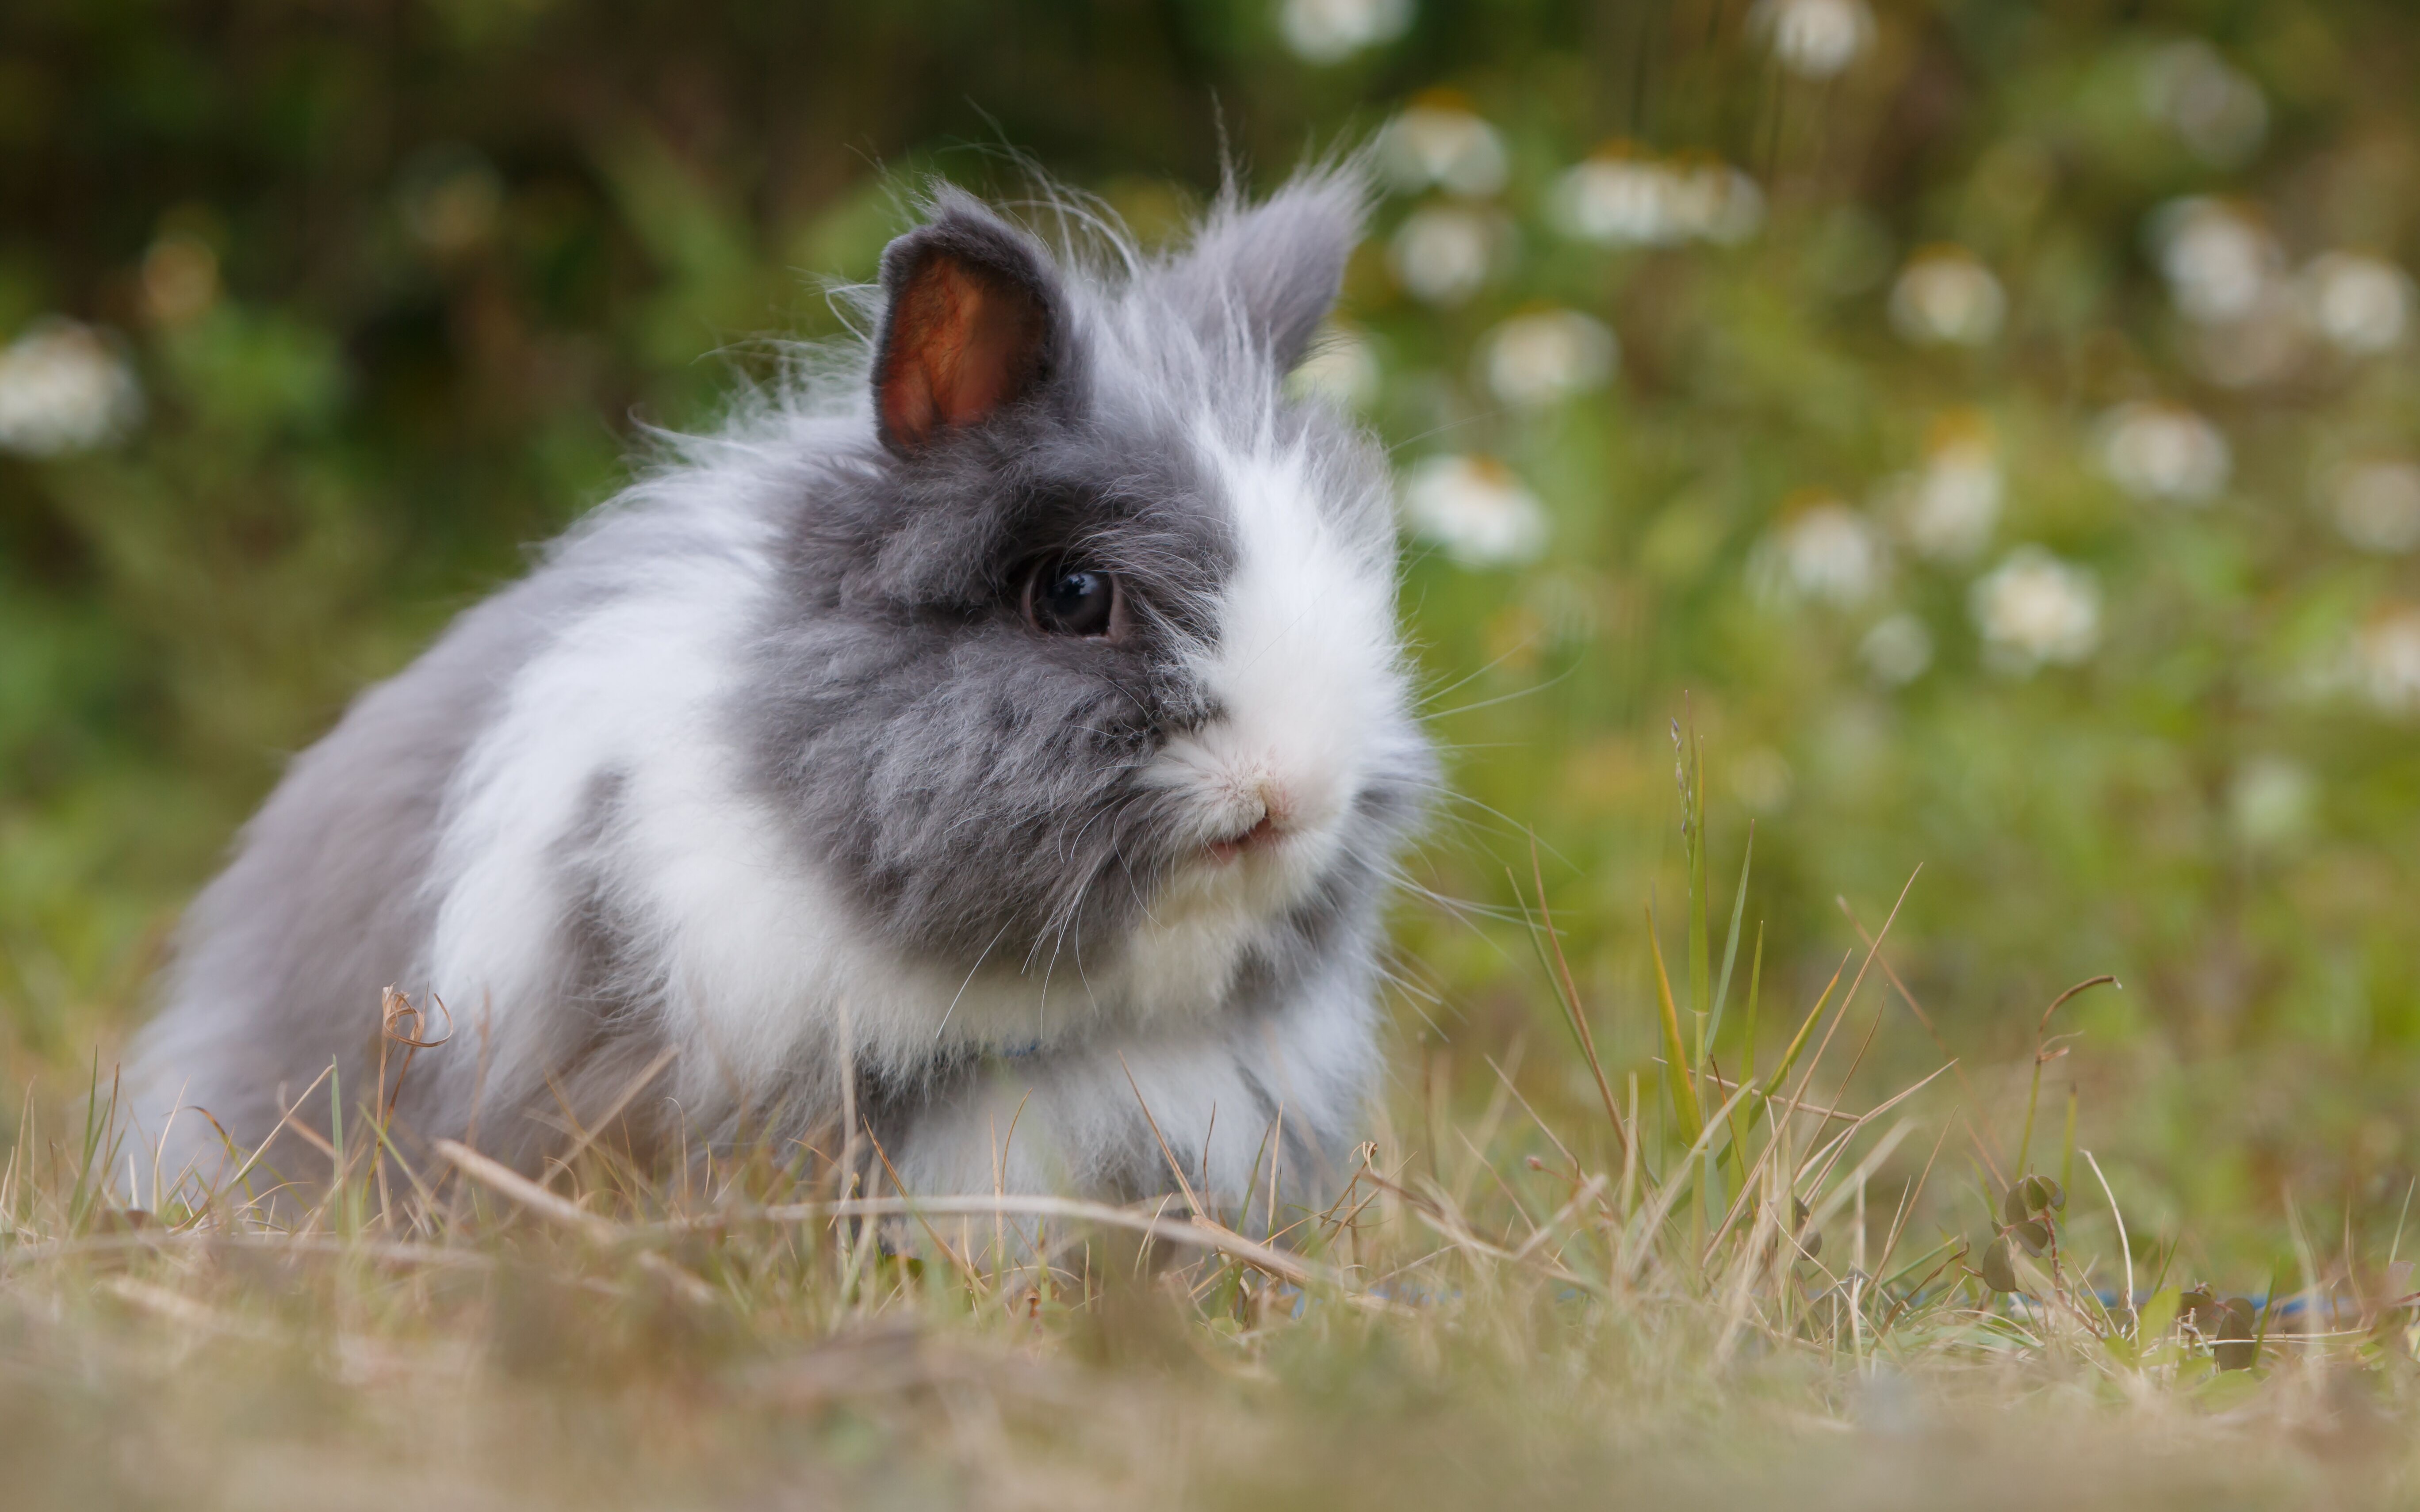 grey and white rabbit on grass ground during daytime